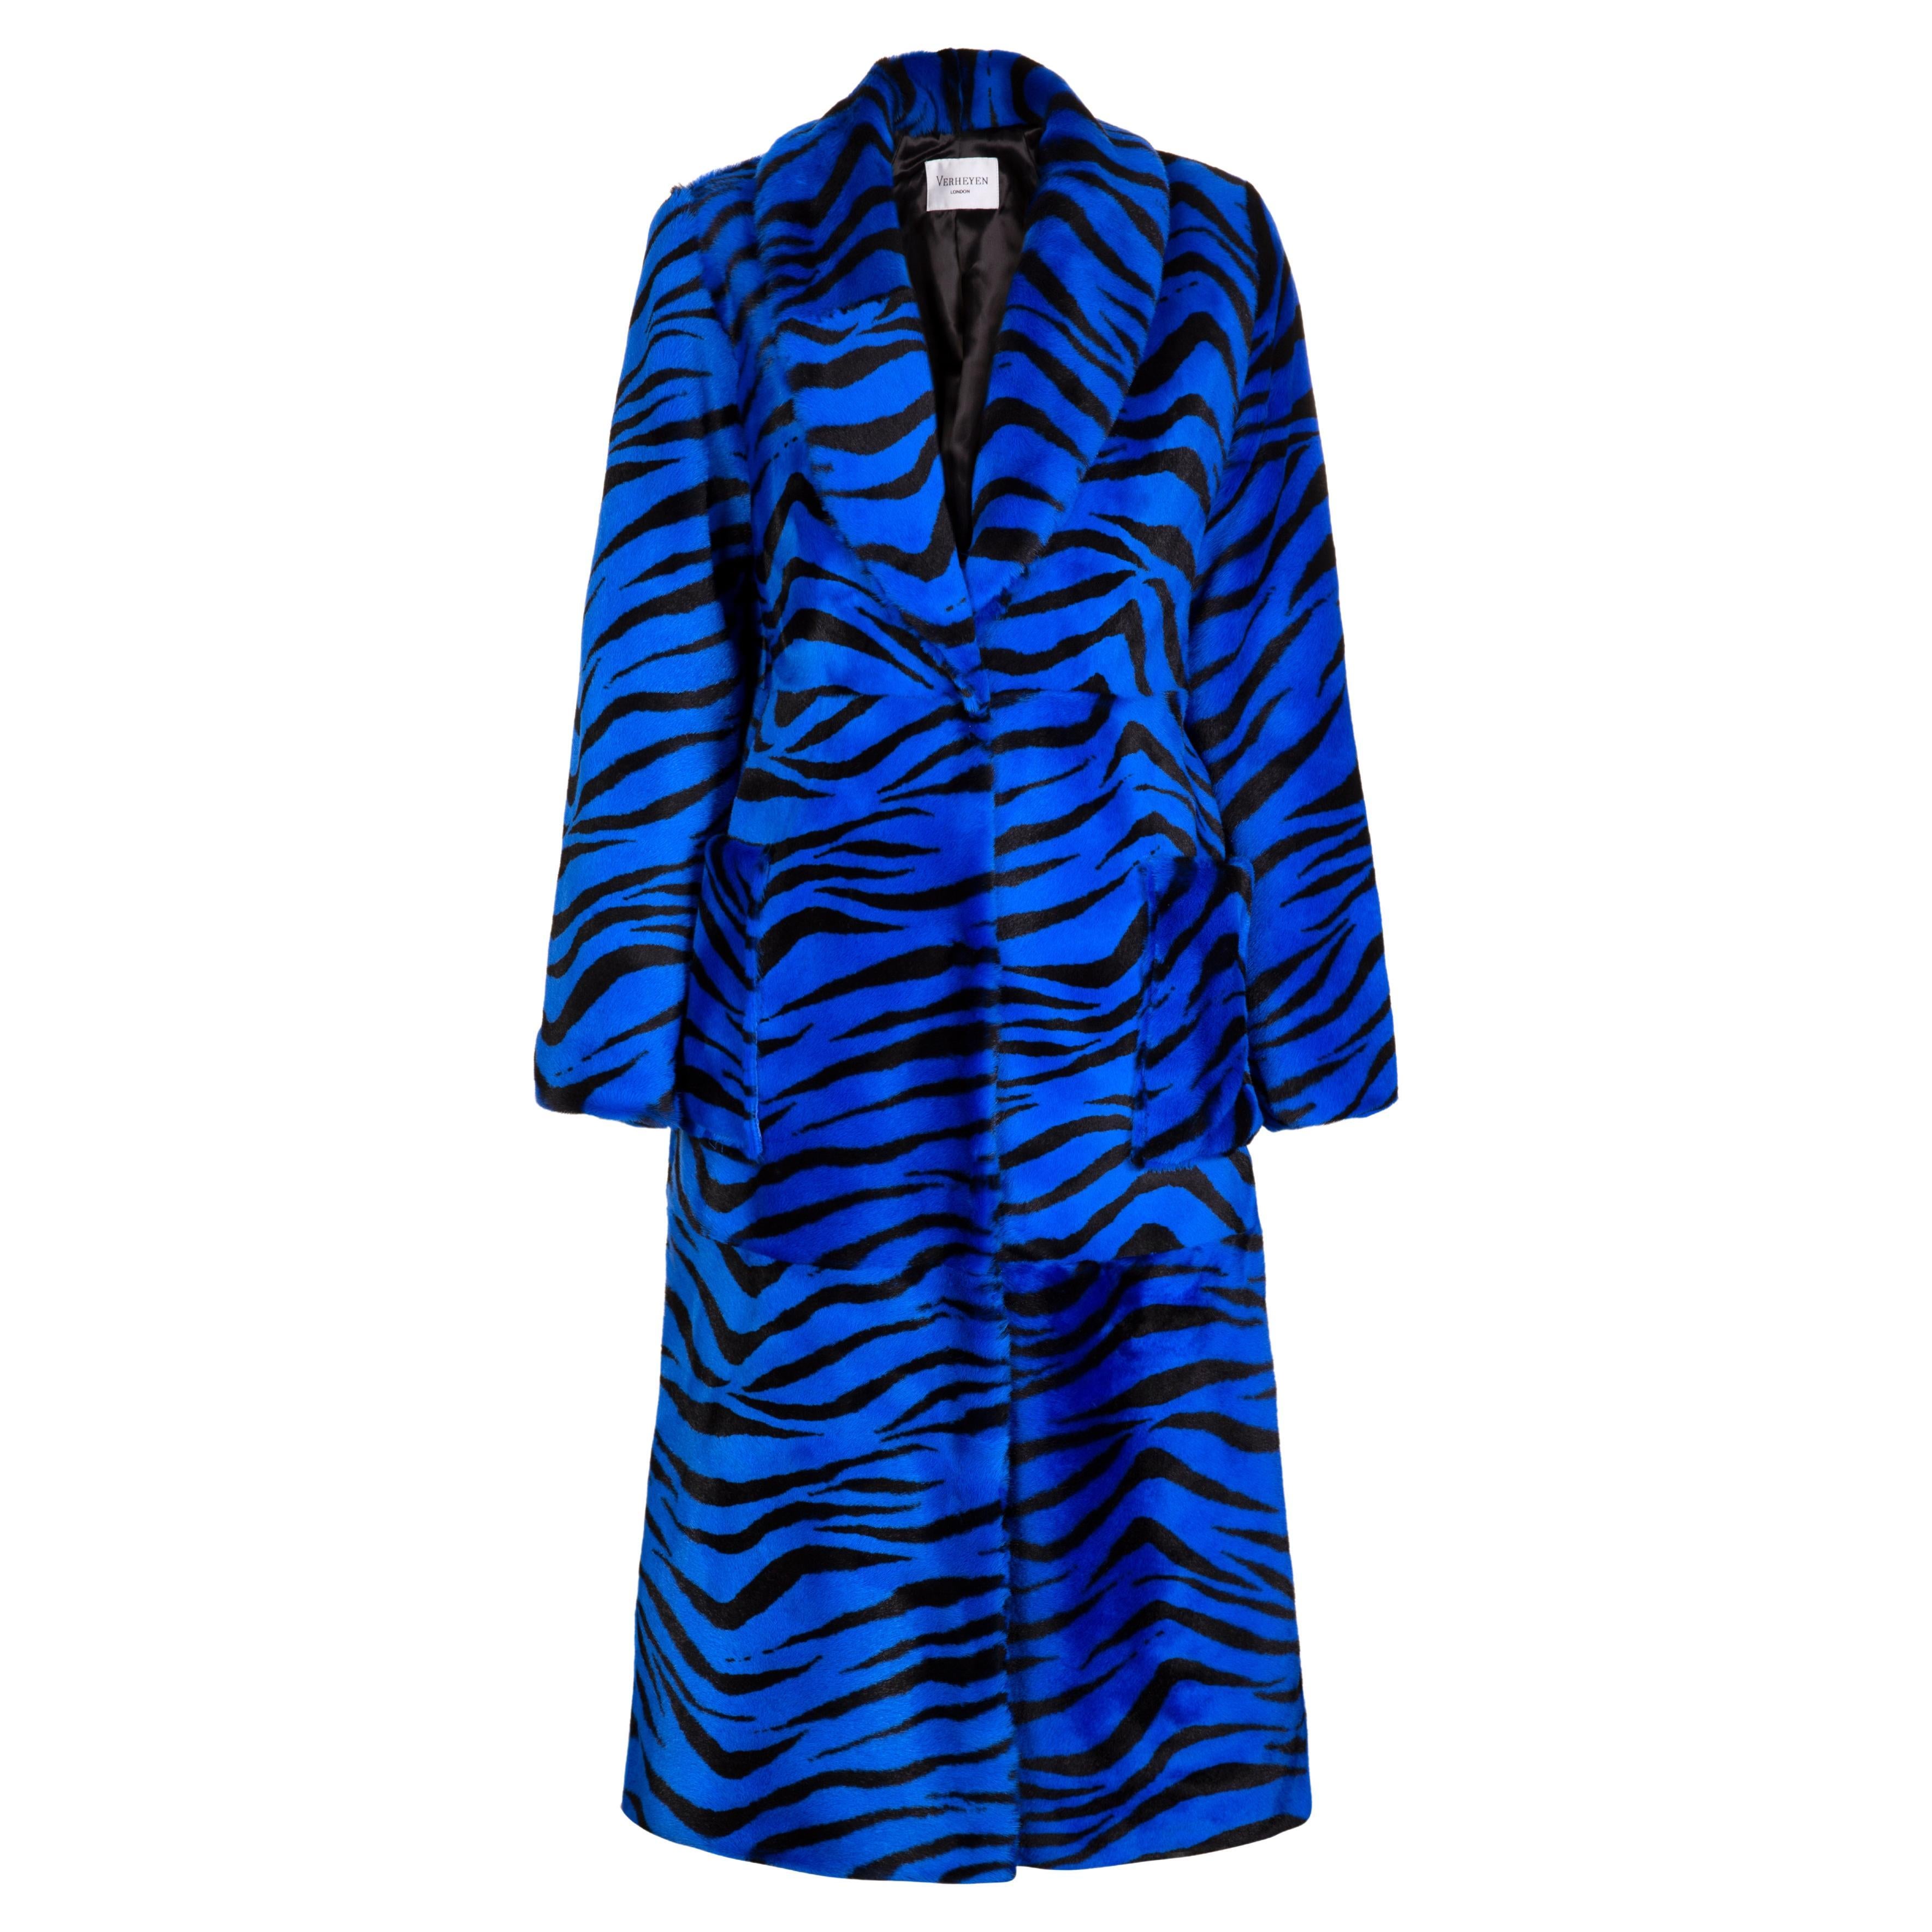 Verheyen London Shearling Coat in Blue Zebra Print size uk 8-10 For Sale